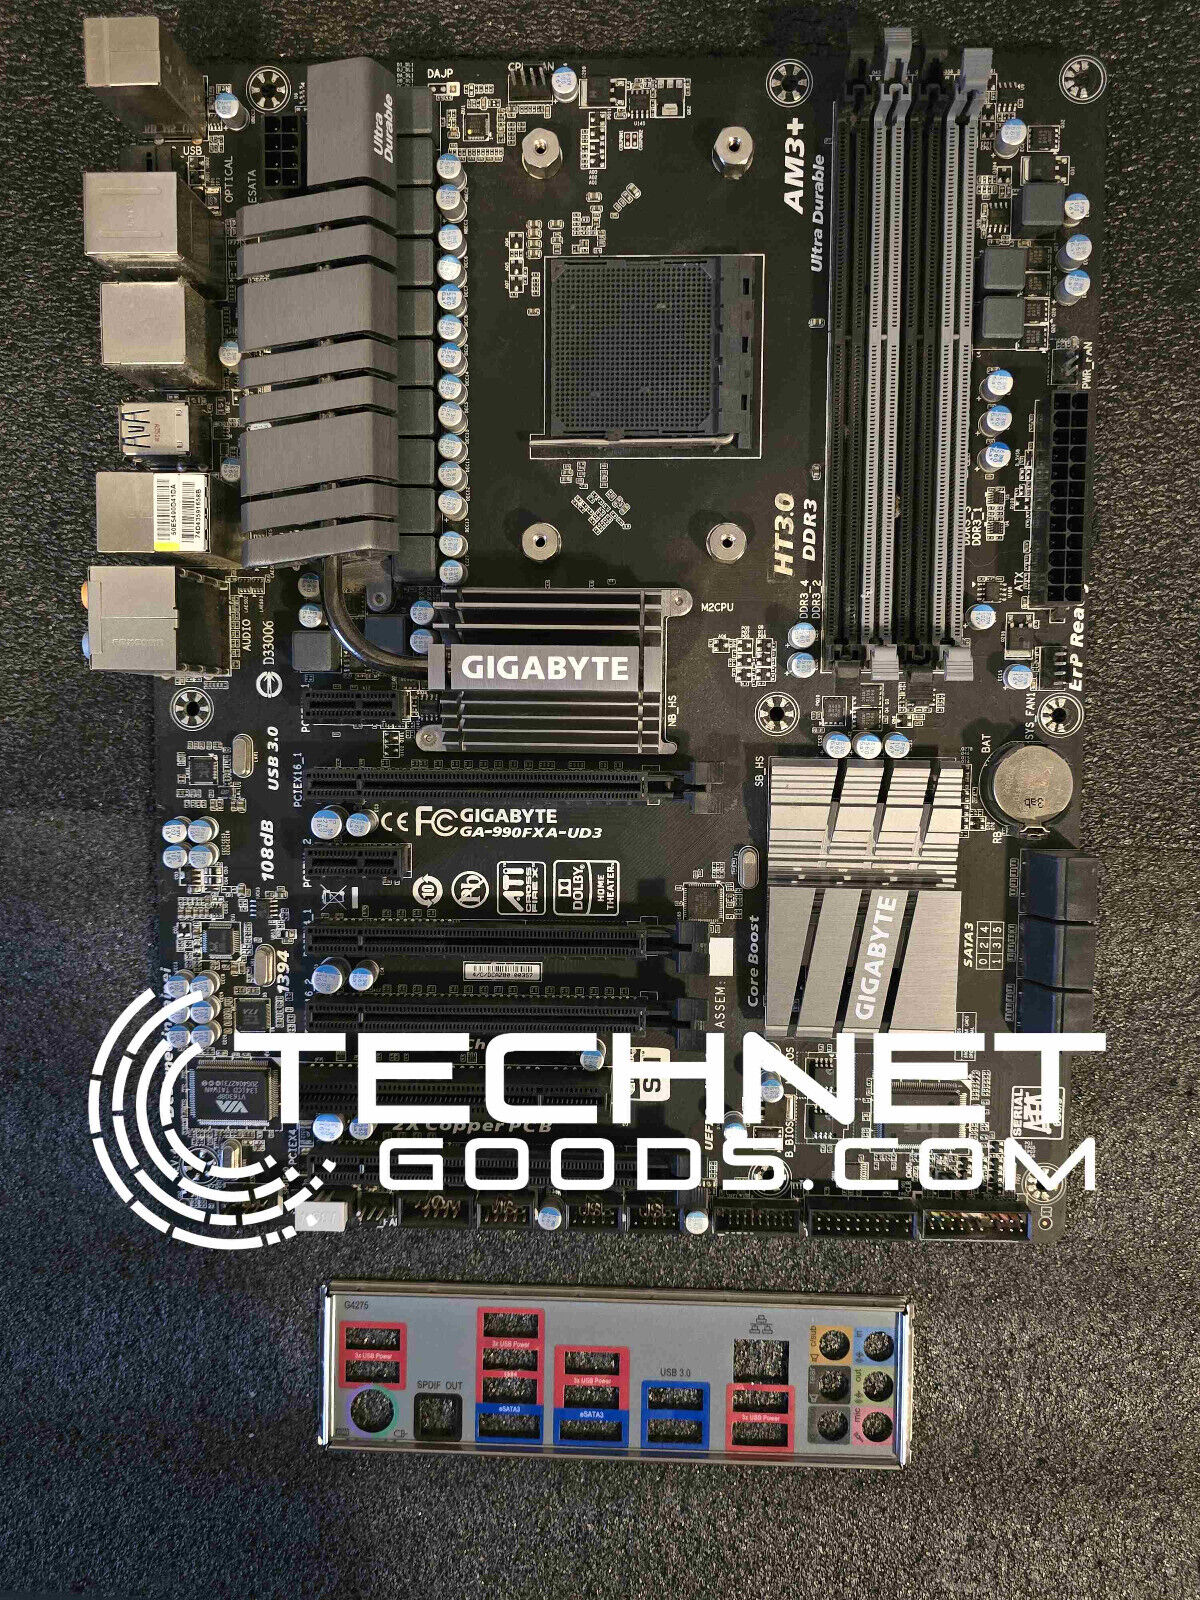 Gigabyte-990FXA-UD3 ATX AMD Motherboard - TESTED